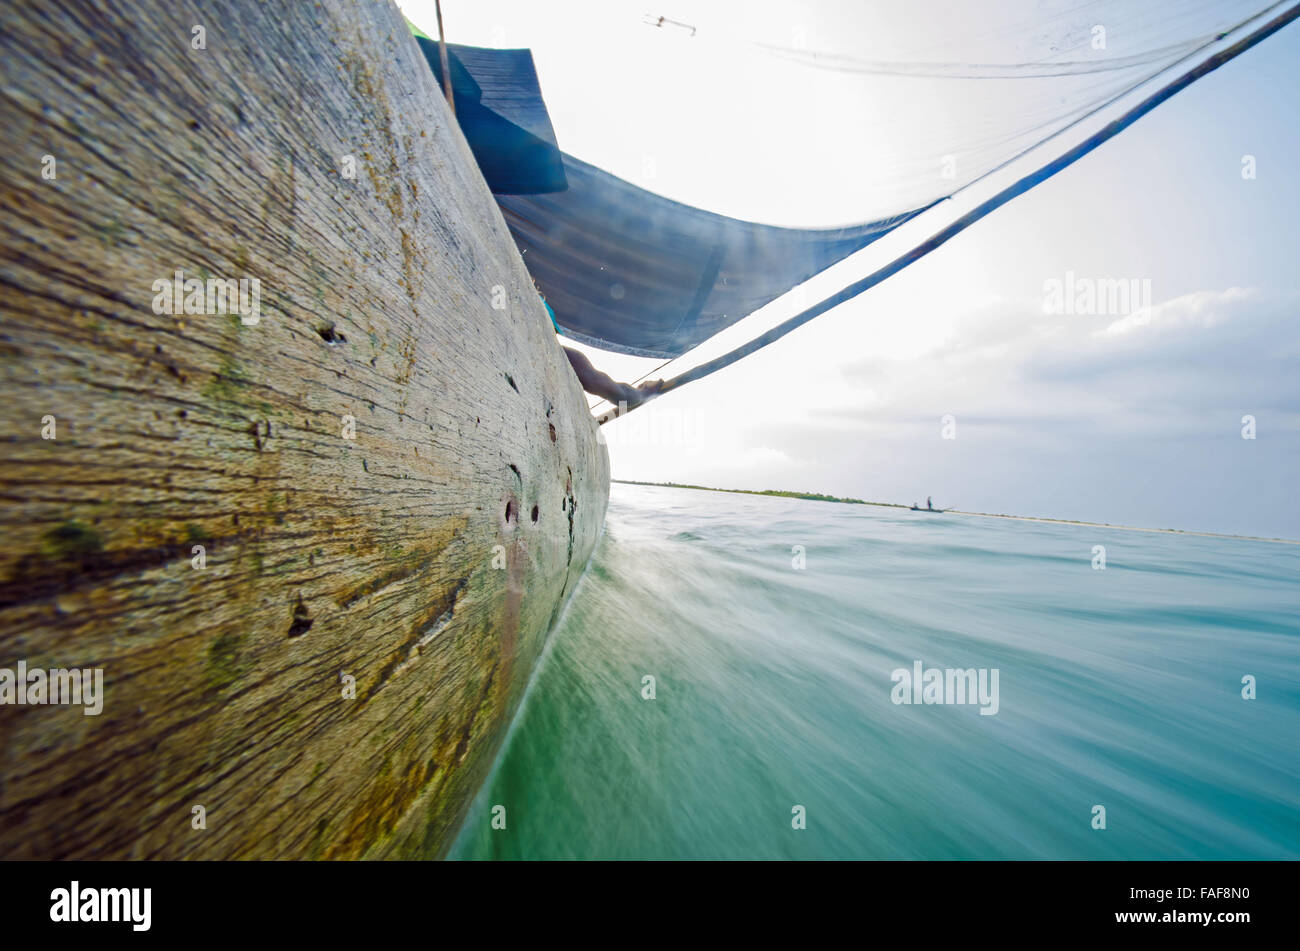 Wooden sailing boat, Sierra Leone. Stock Photo